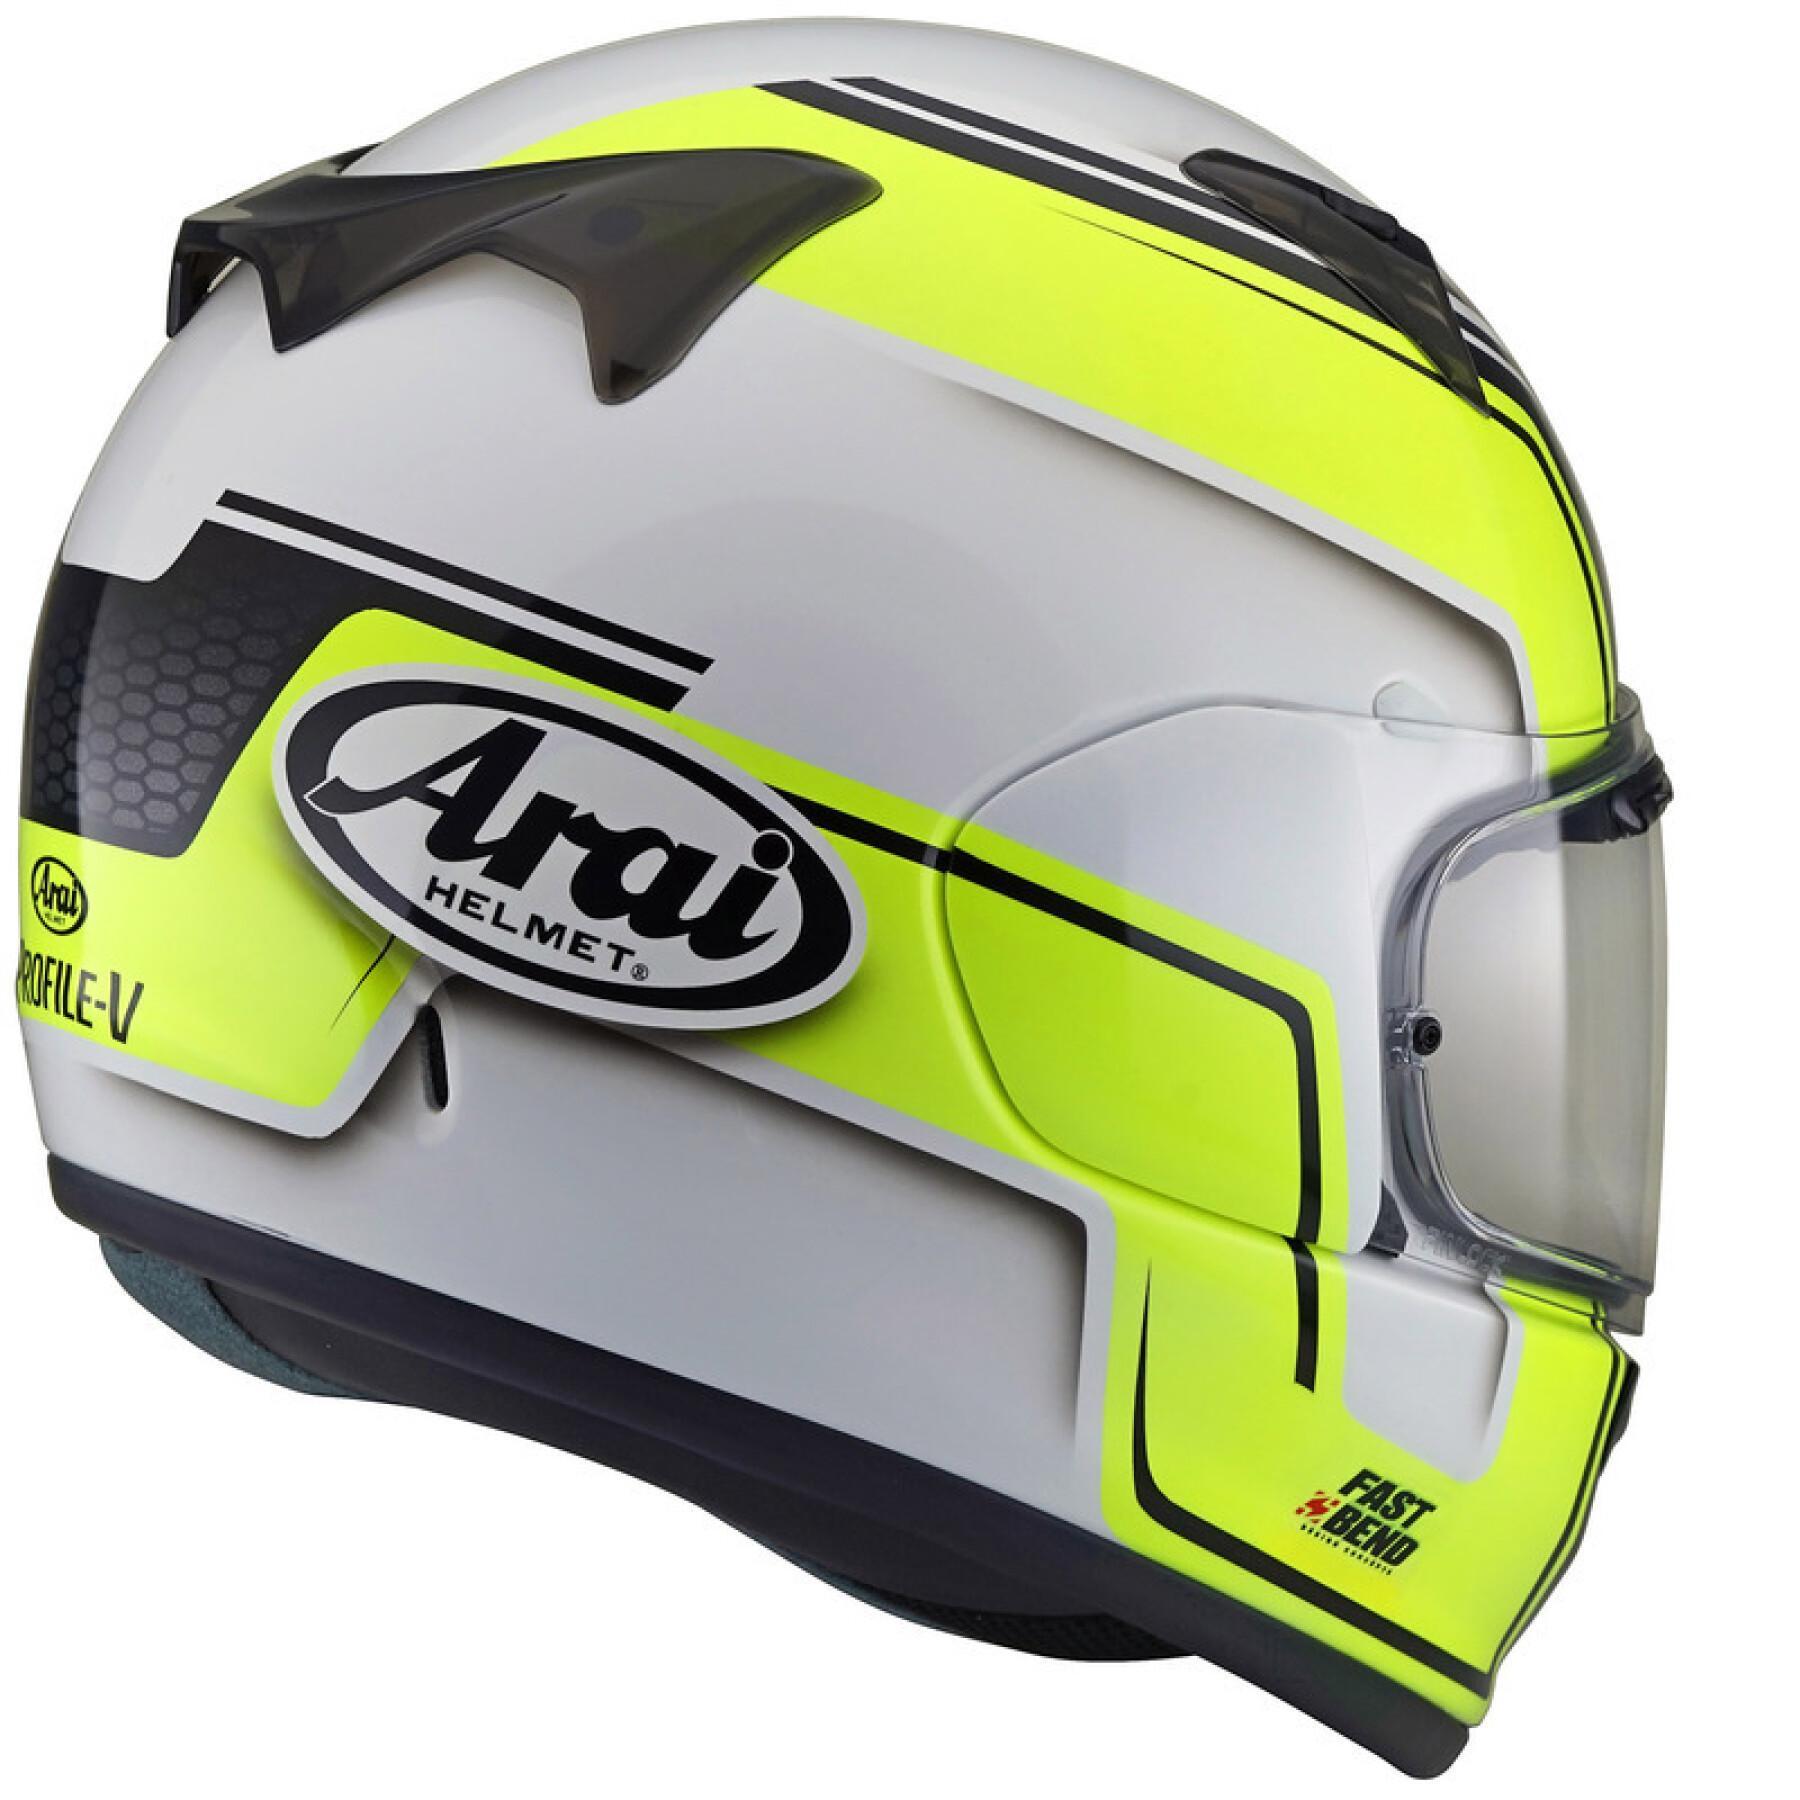 Full face motorcycle helmet Arai Profile-V Bend